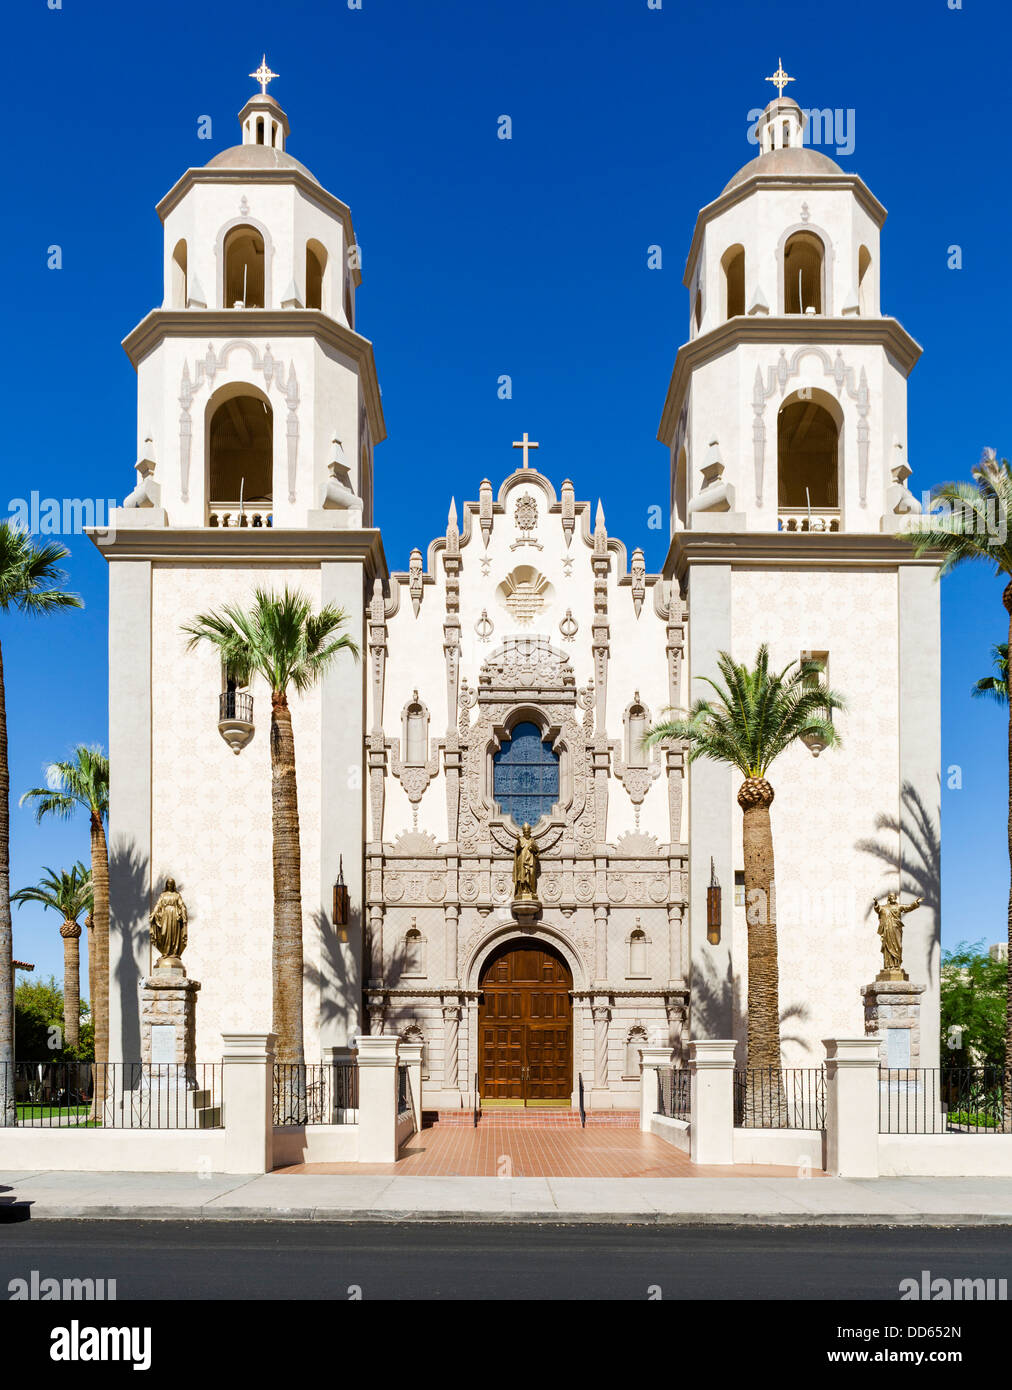 Facade of St Augustine Cathedral, Stone Stree, Tucson, Arizona, USA Stock Photo